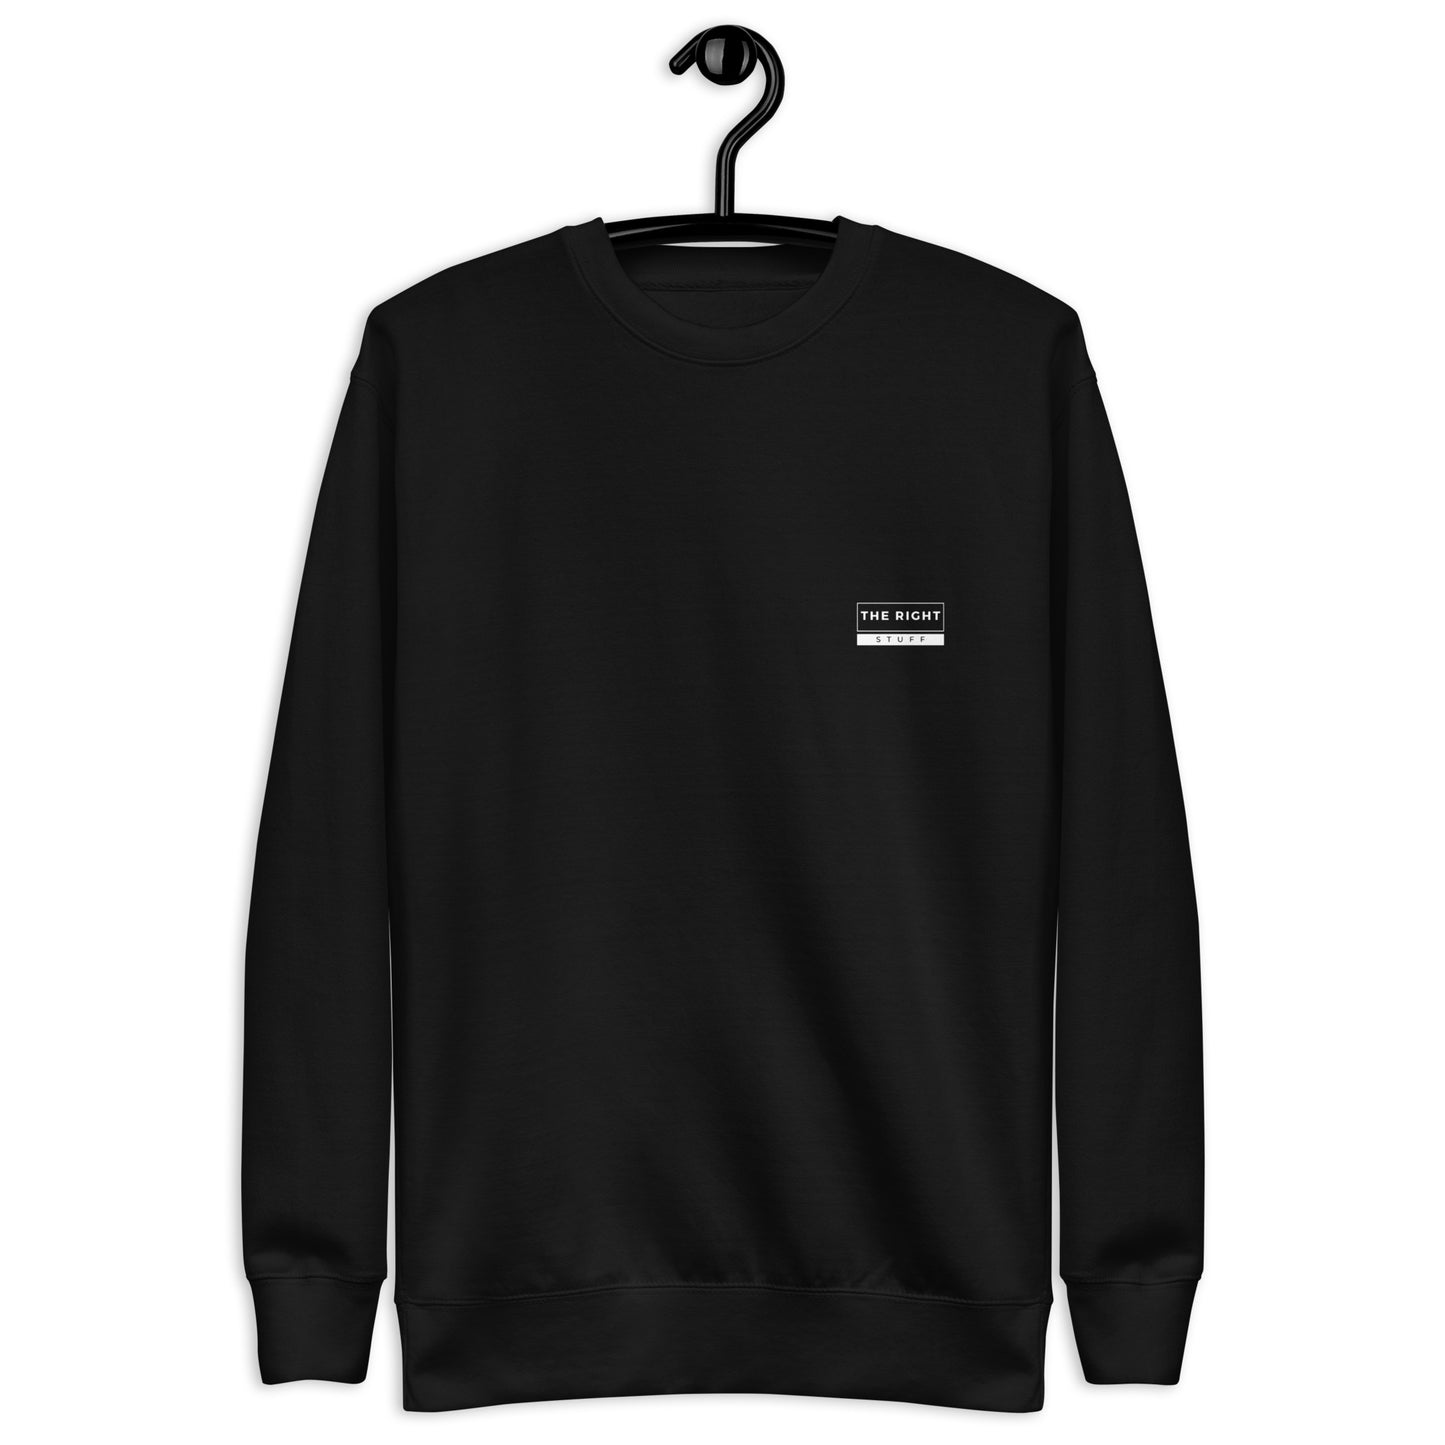 Unisex Premium Sweatshirt - KING OF KINGS back print